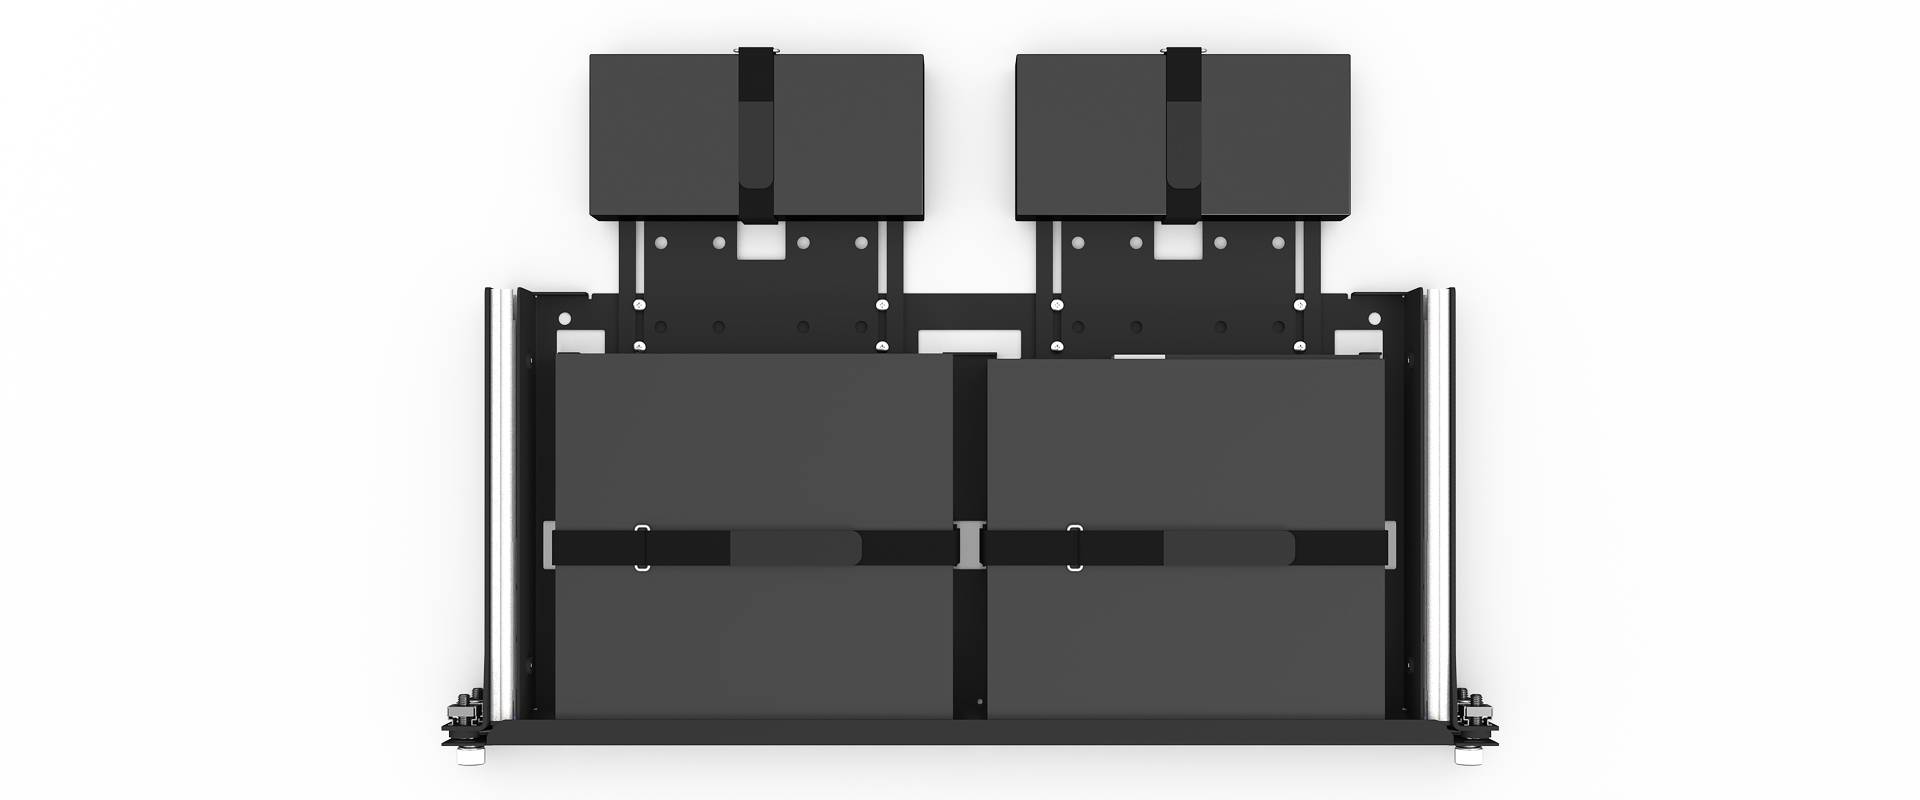 2x Dell Optiplex Micro Series rack mount